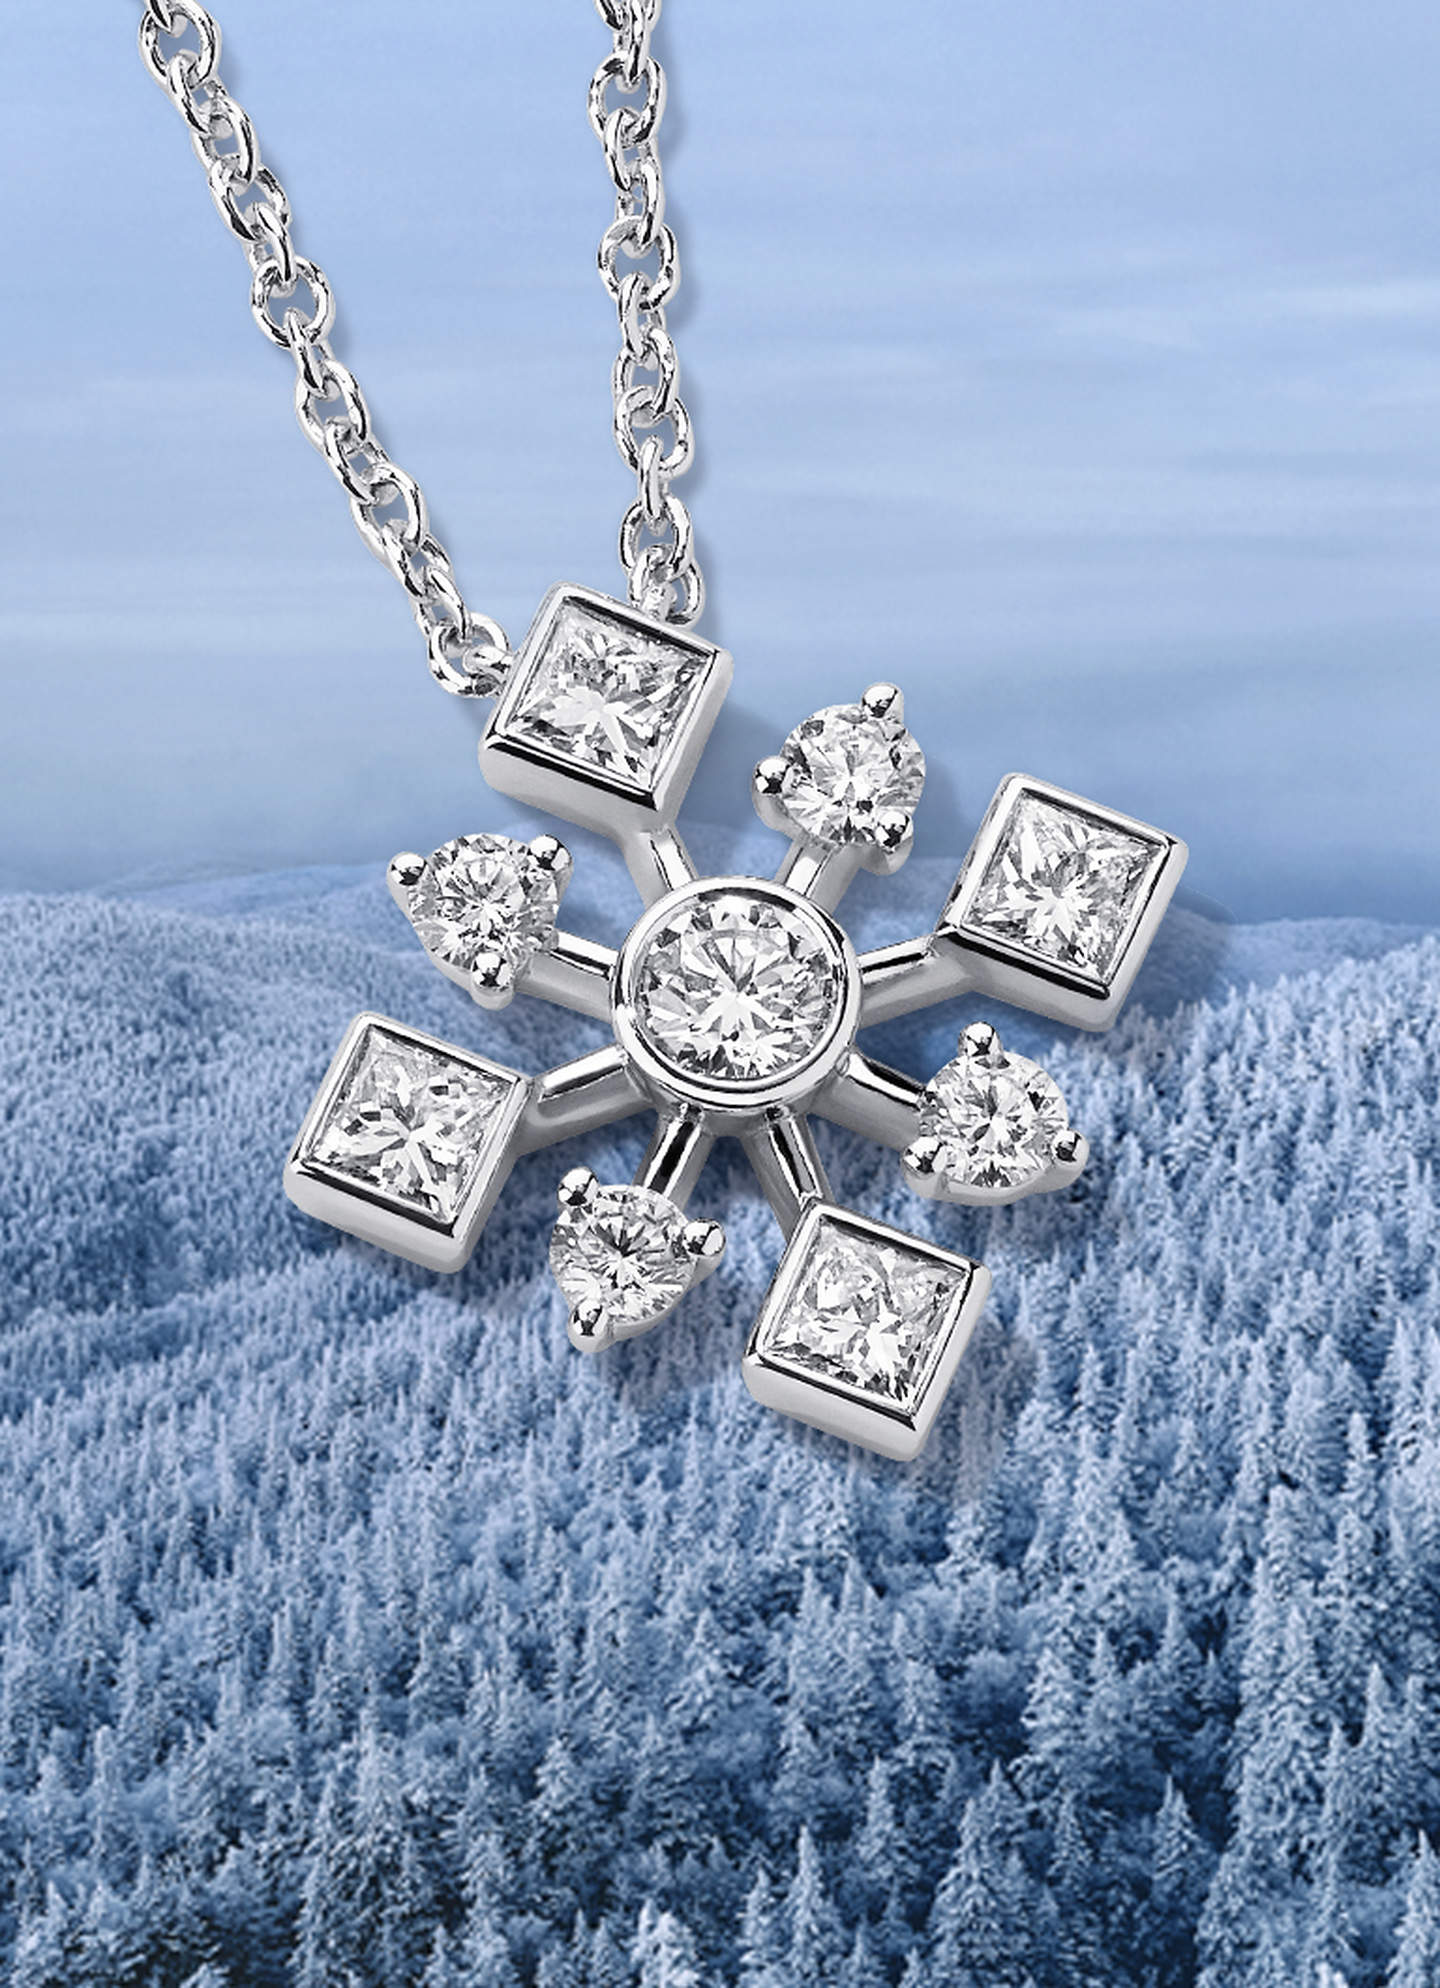 Birks Snowflake diamond pendant on a snowy background.